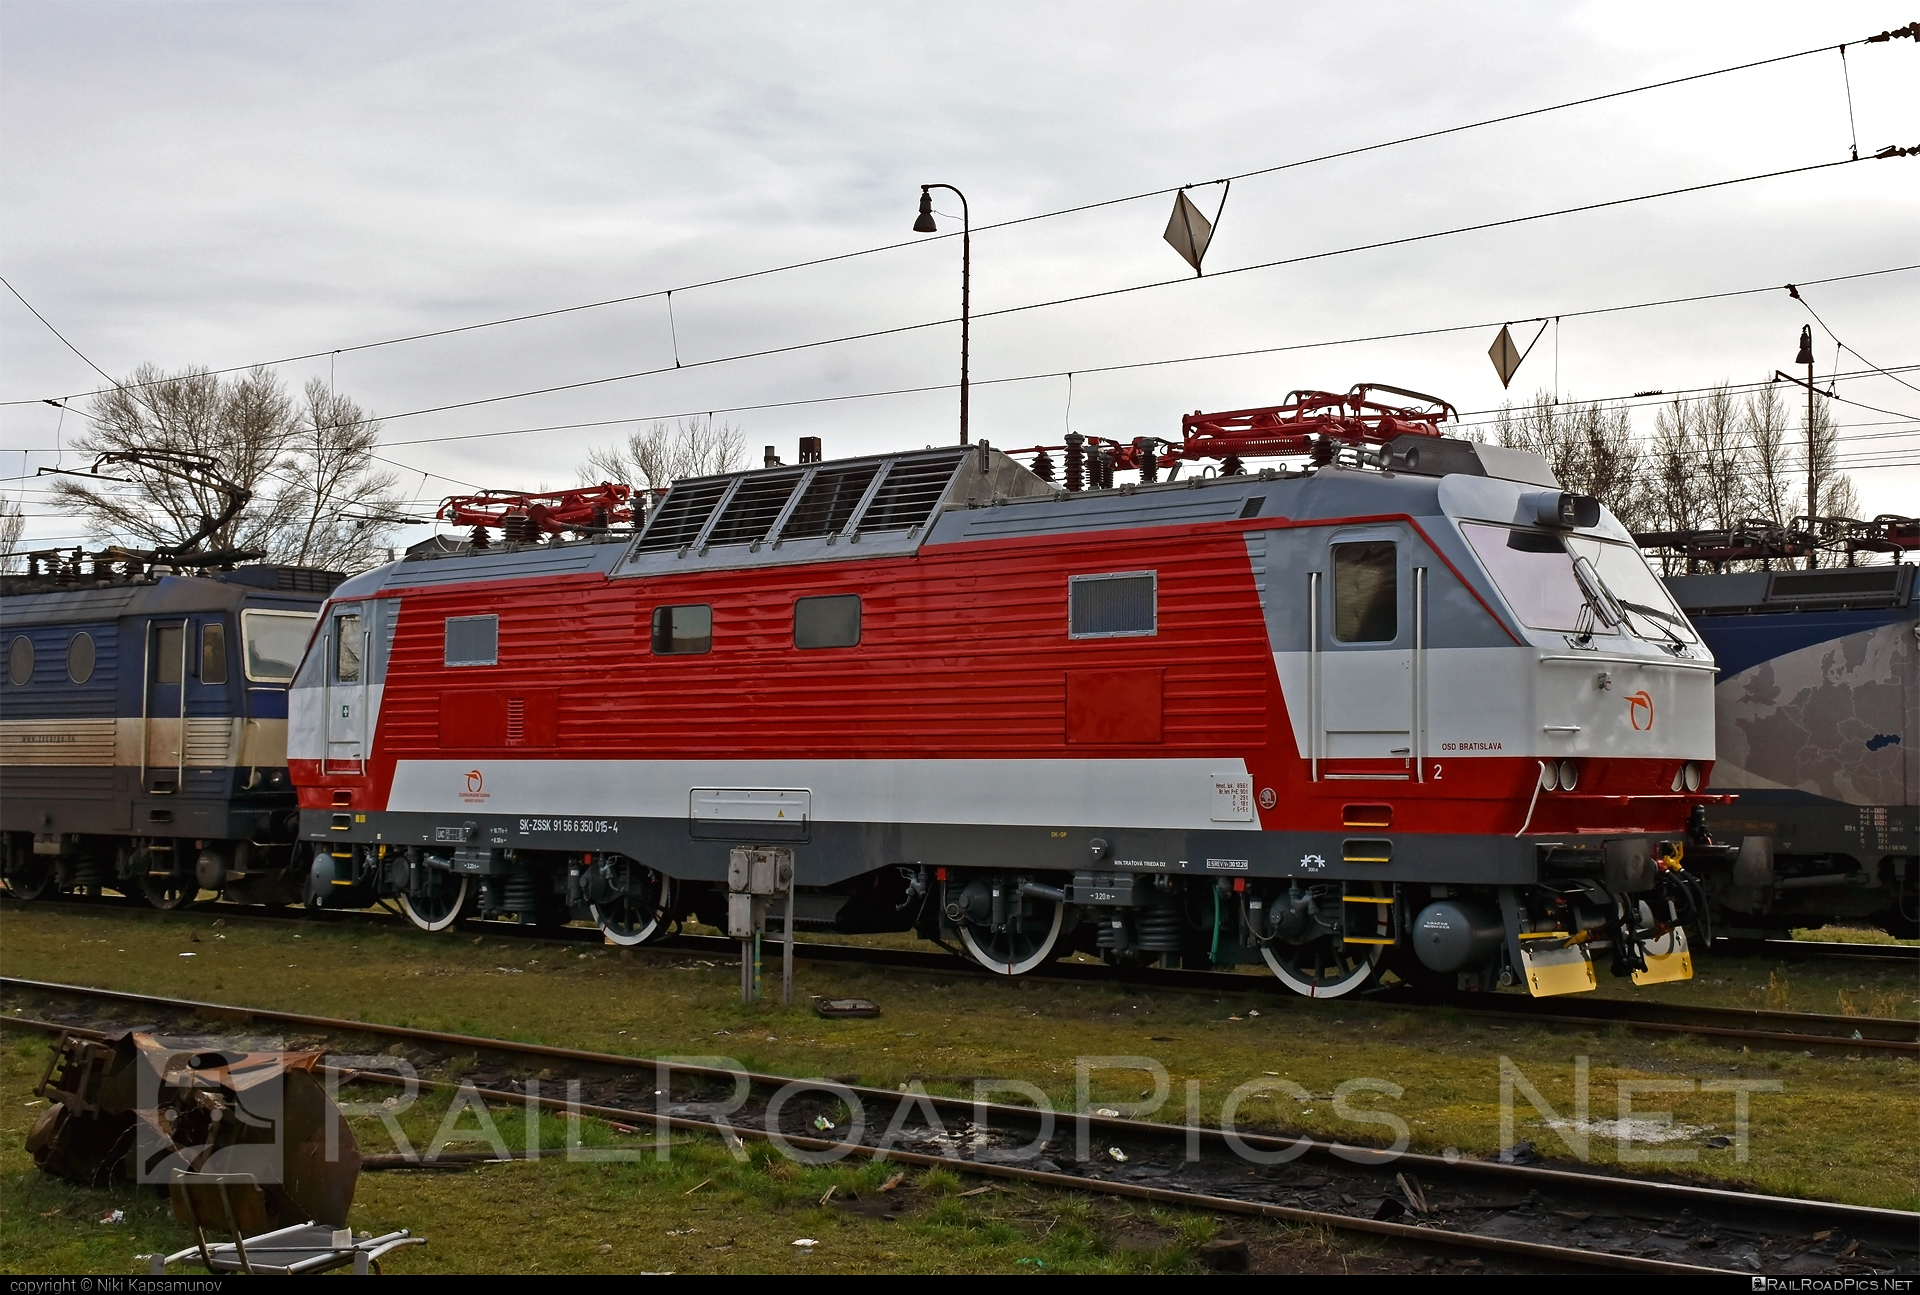 Škoda 55E - 350 015-4 operated by Železničná Spoločnost' Slovensko, a.s. #ZeleznicnaSpolocnostSlovensko #gorila #locomotive350 #skoda #skoda55e #zssk